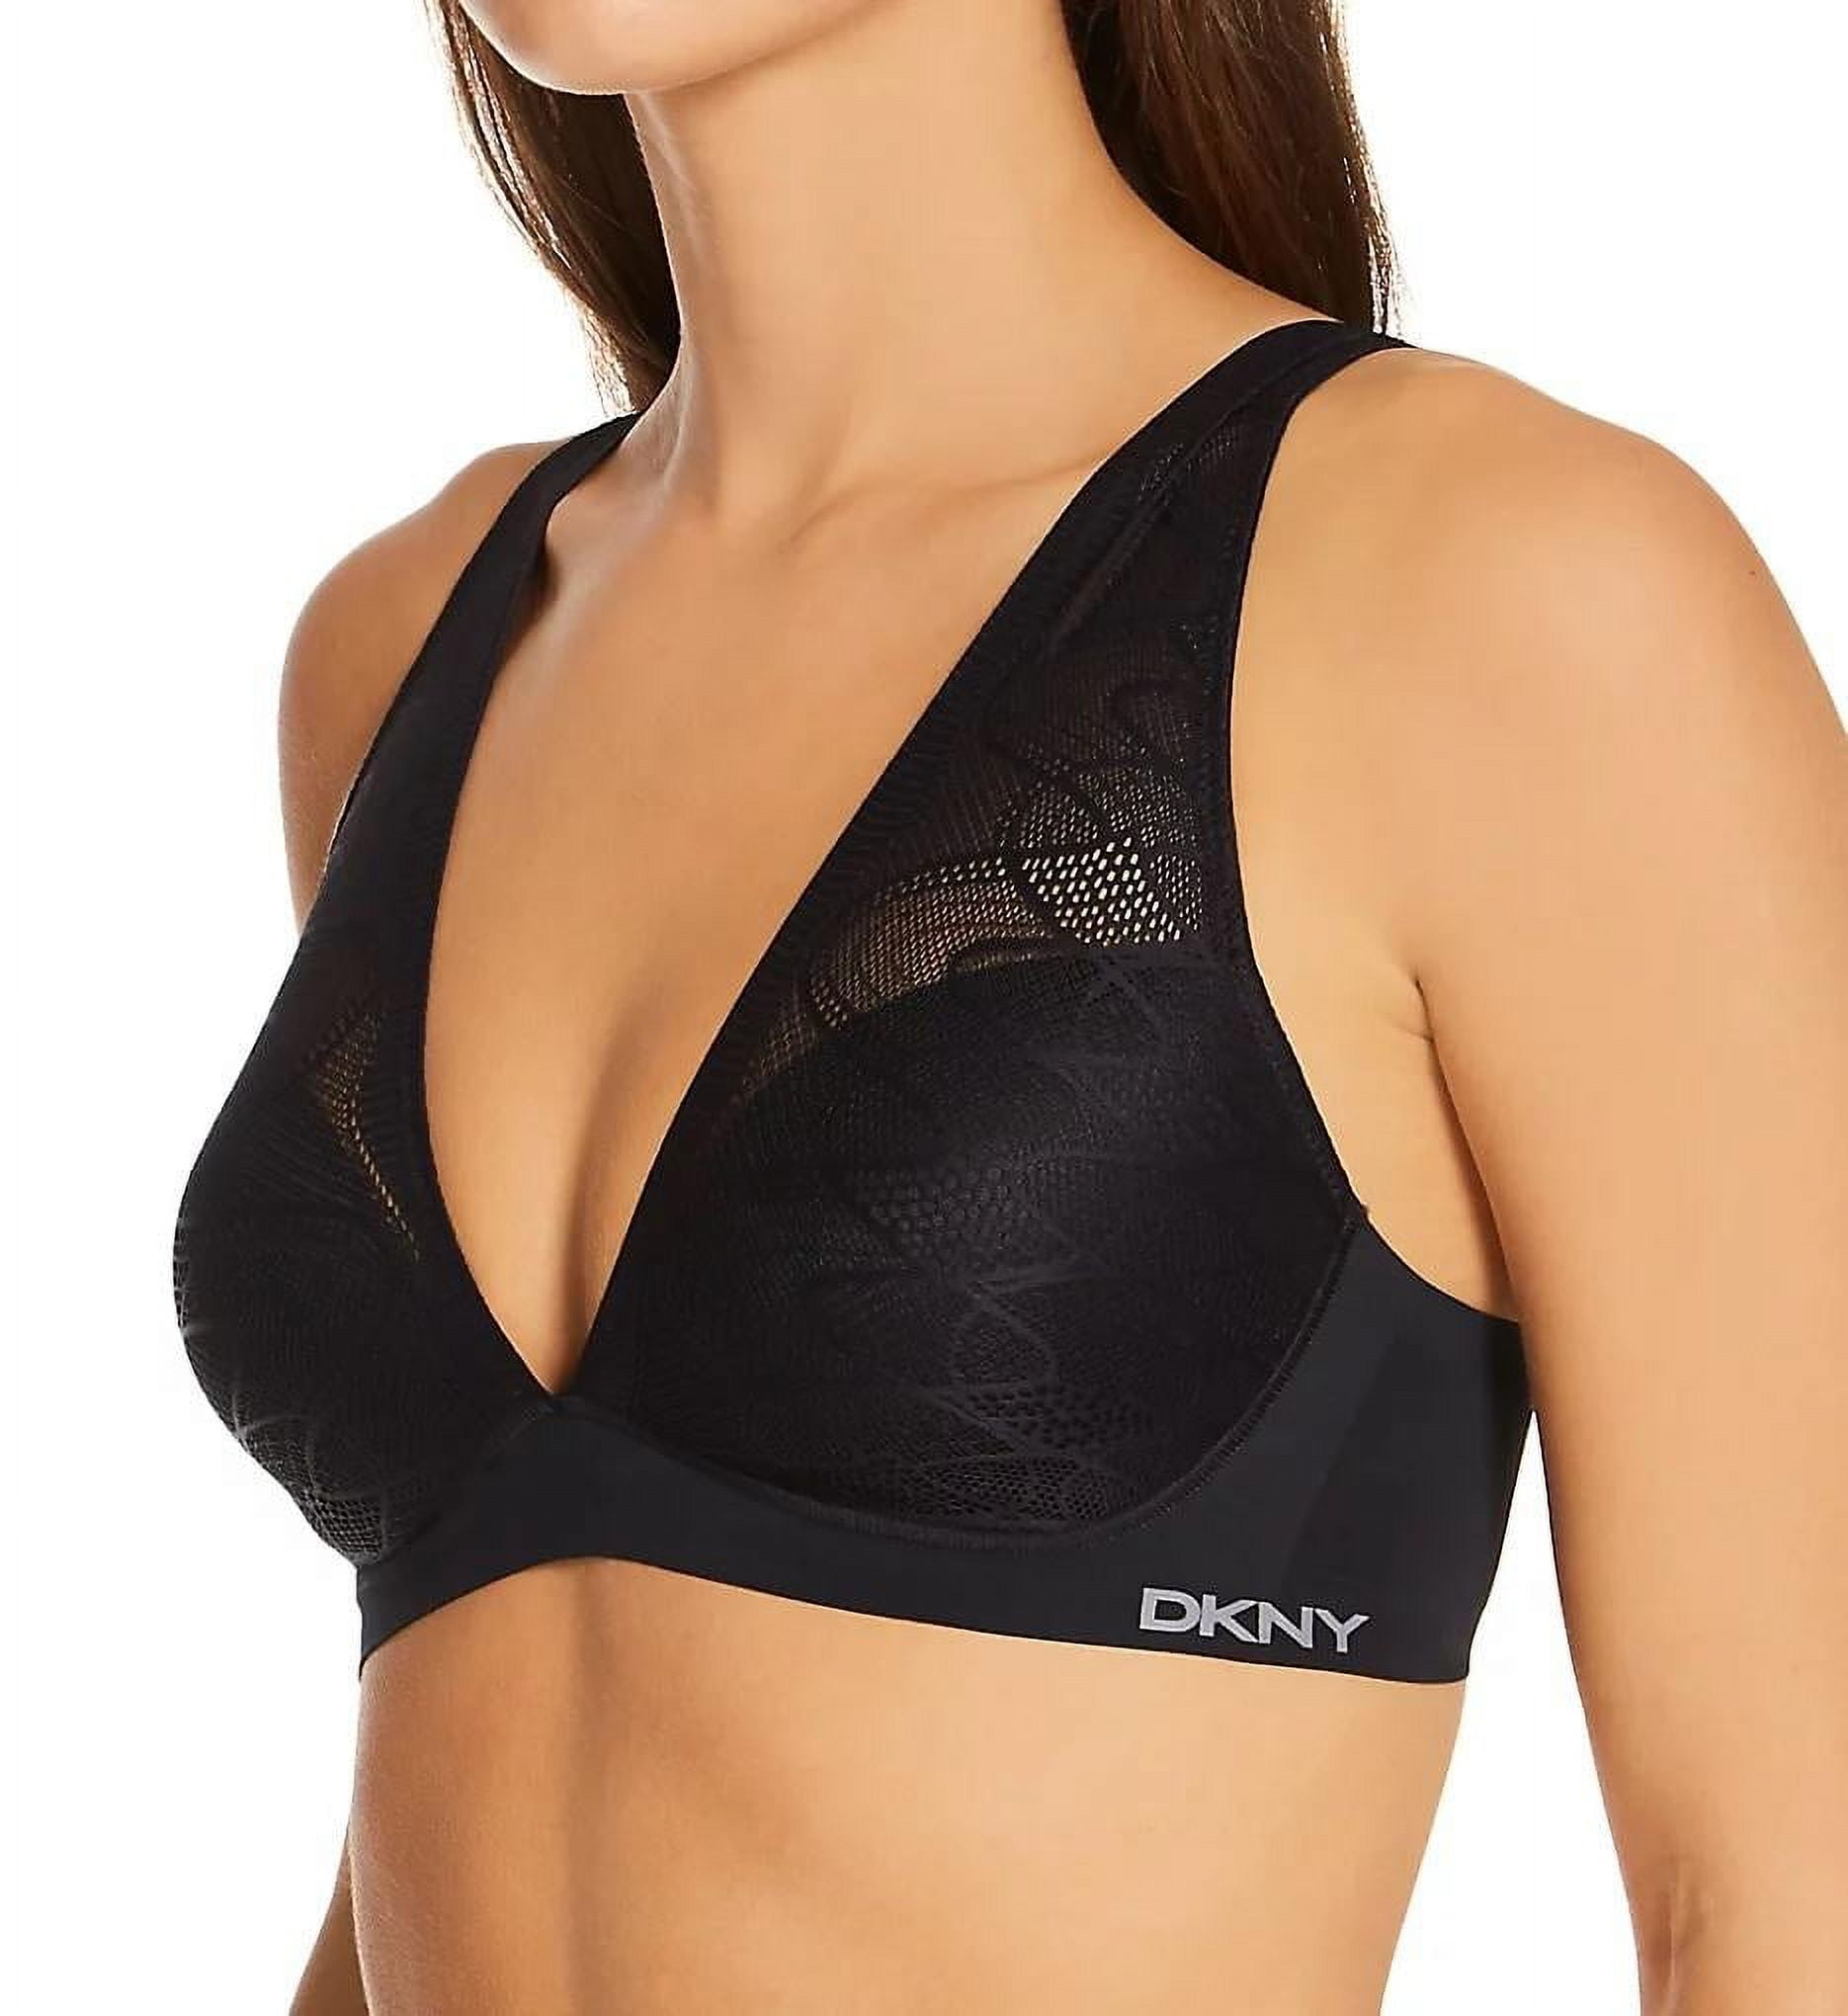 DKNY Black Lace Comfort Wireless Bra, US Small, NWOT 